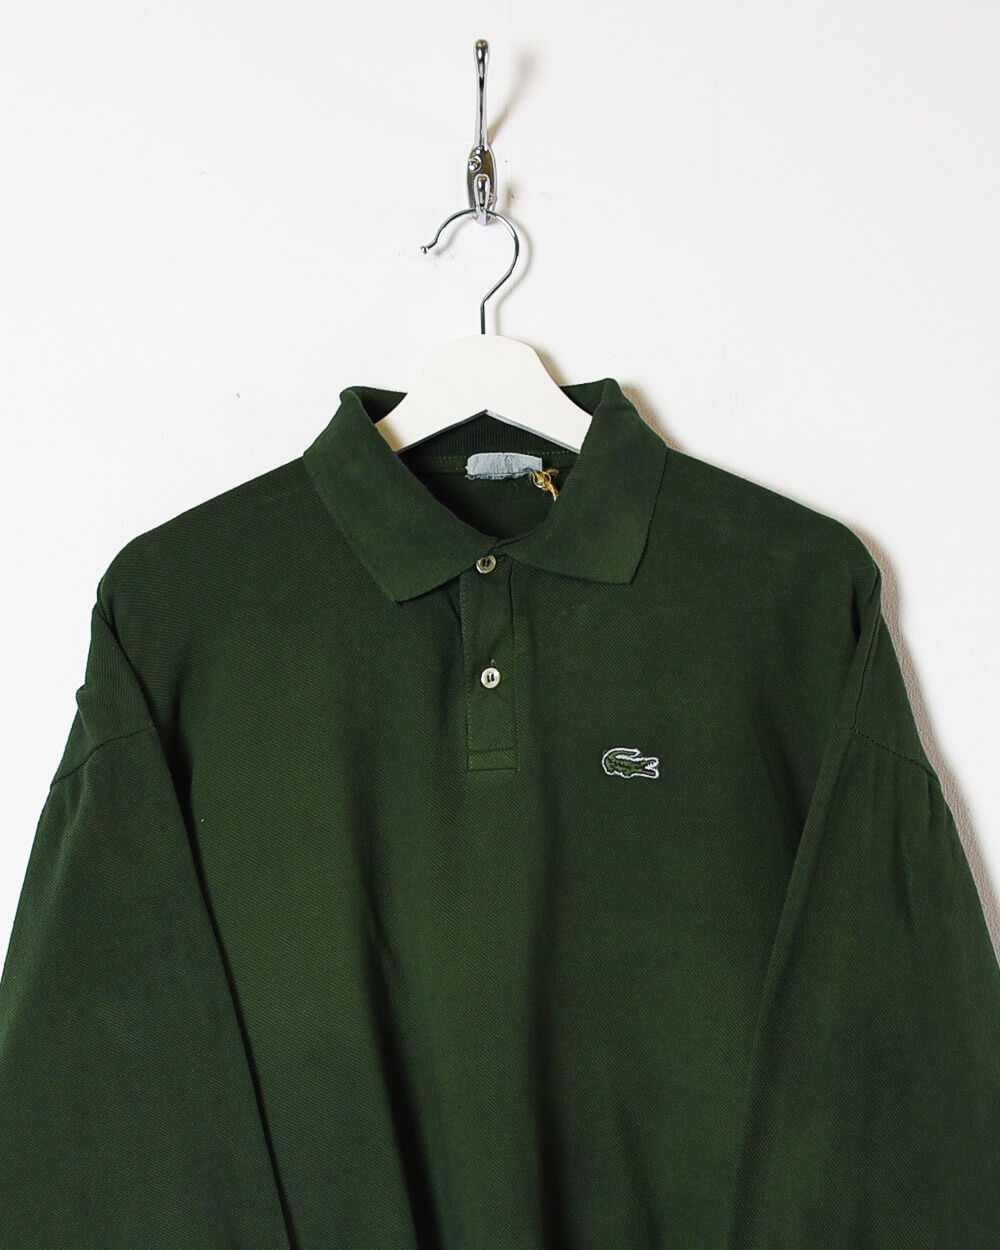 Green Chemise Lacoste Sweatshirt - Medium